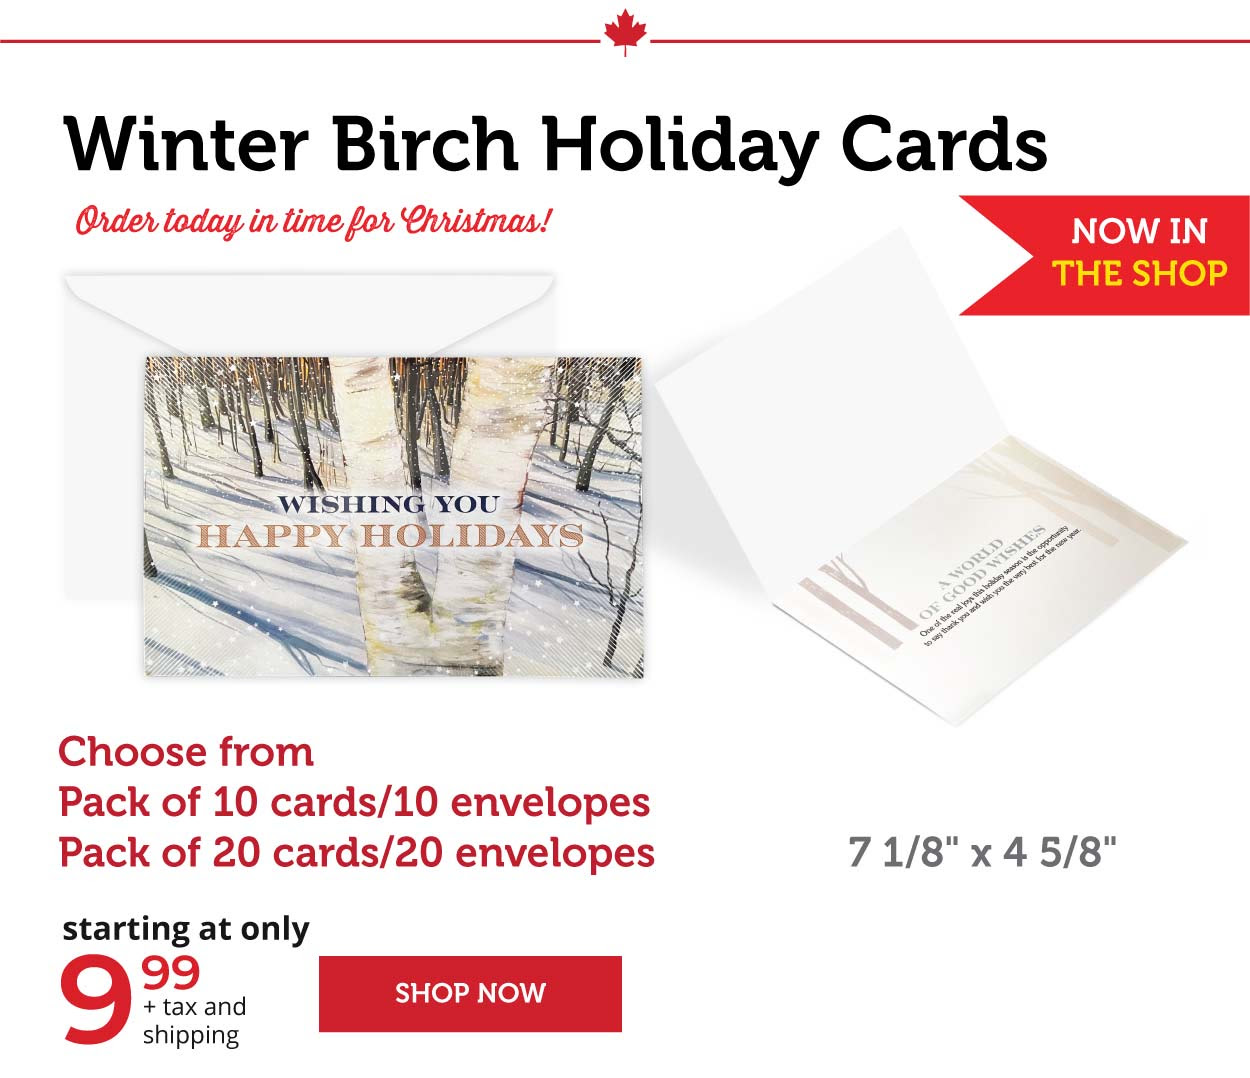 Winter Birch Holiday Cards